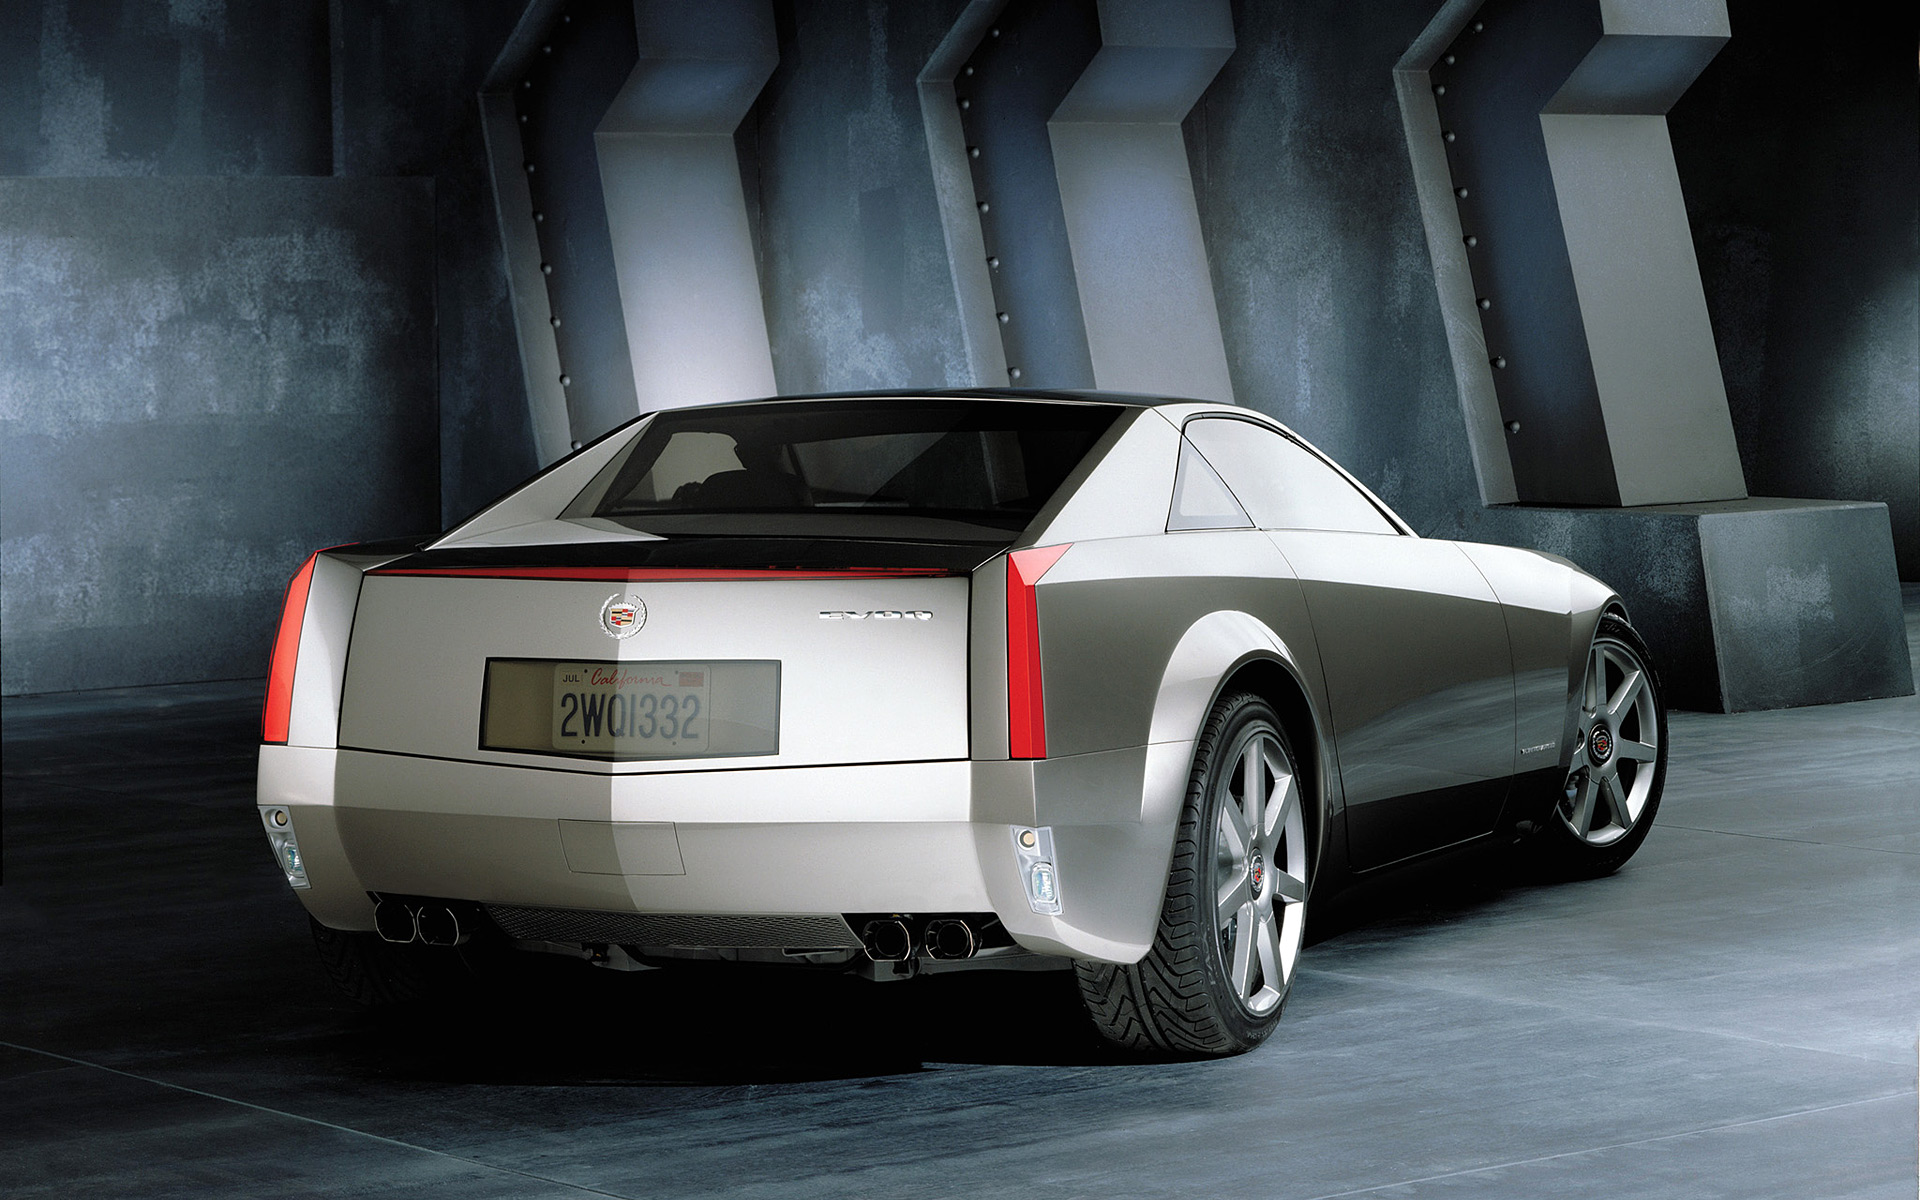  1999 Cadillac Evoq Concept Wallpaper.